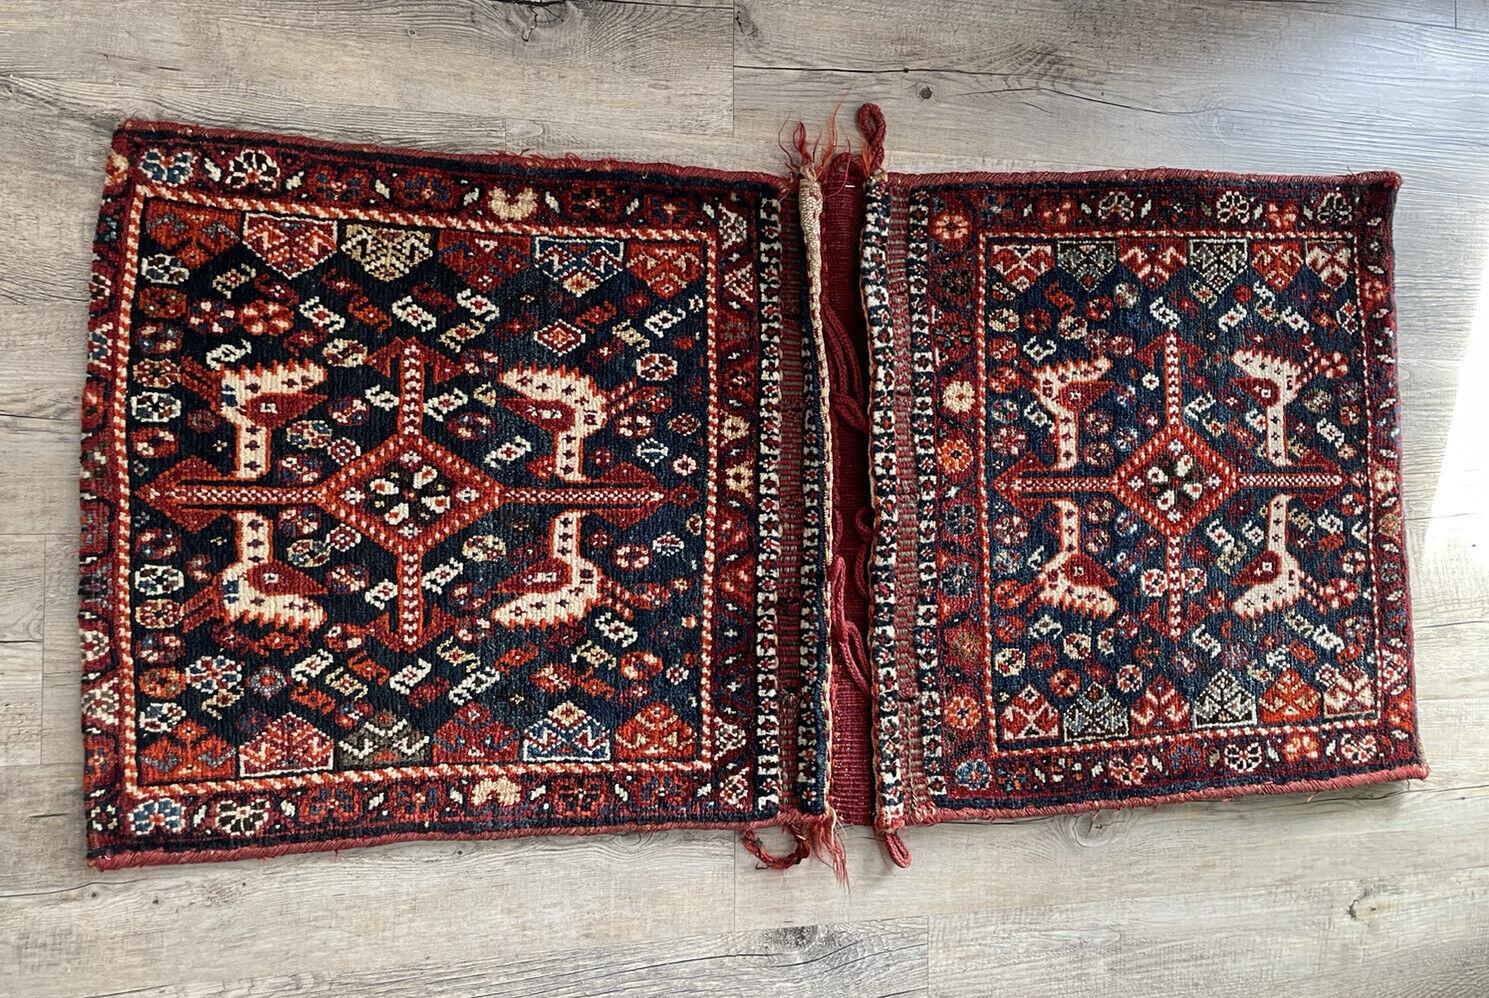 Hand-Woven Handmade Antique Persian Collectible Gashkai Bag 1.7' x 3.5', 1900s - 1N20 For Sale